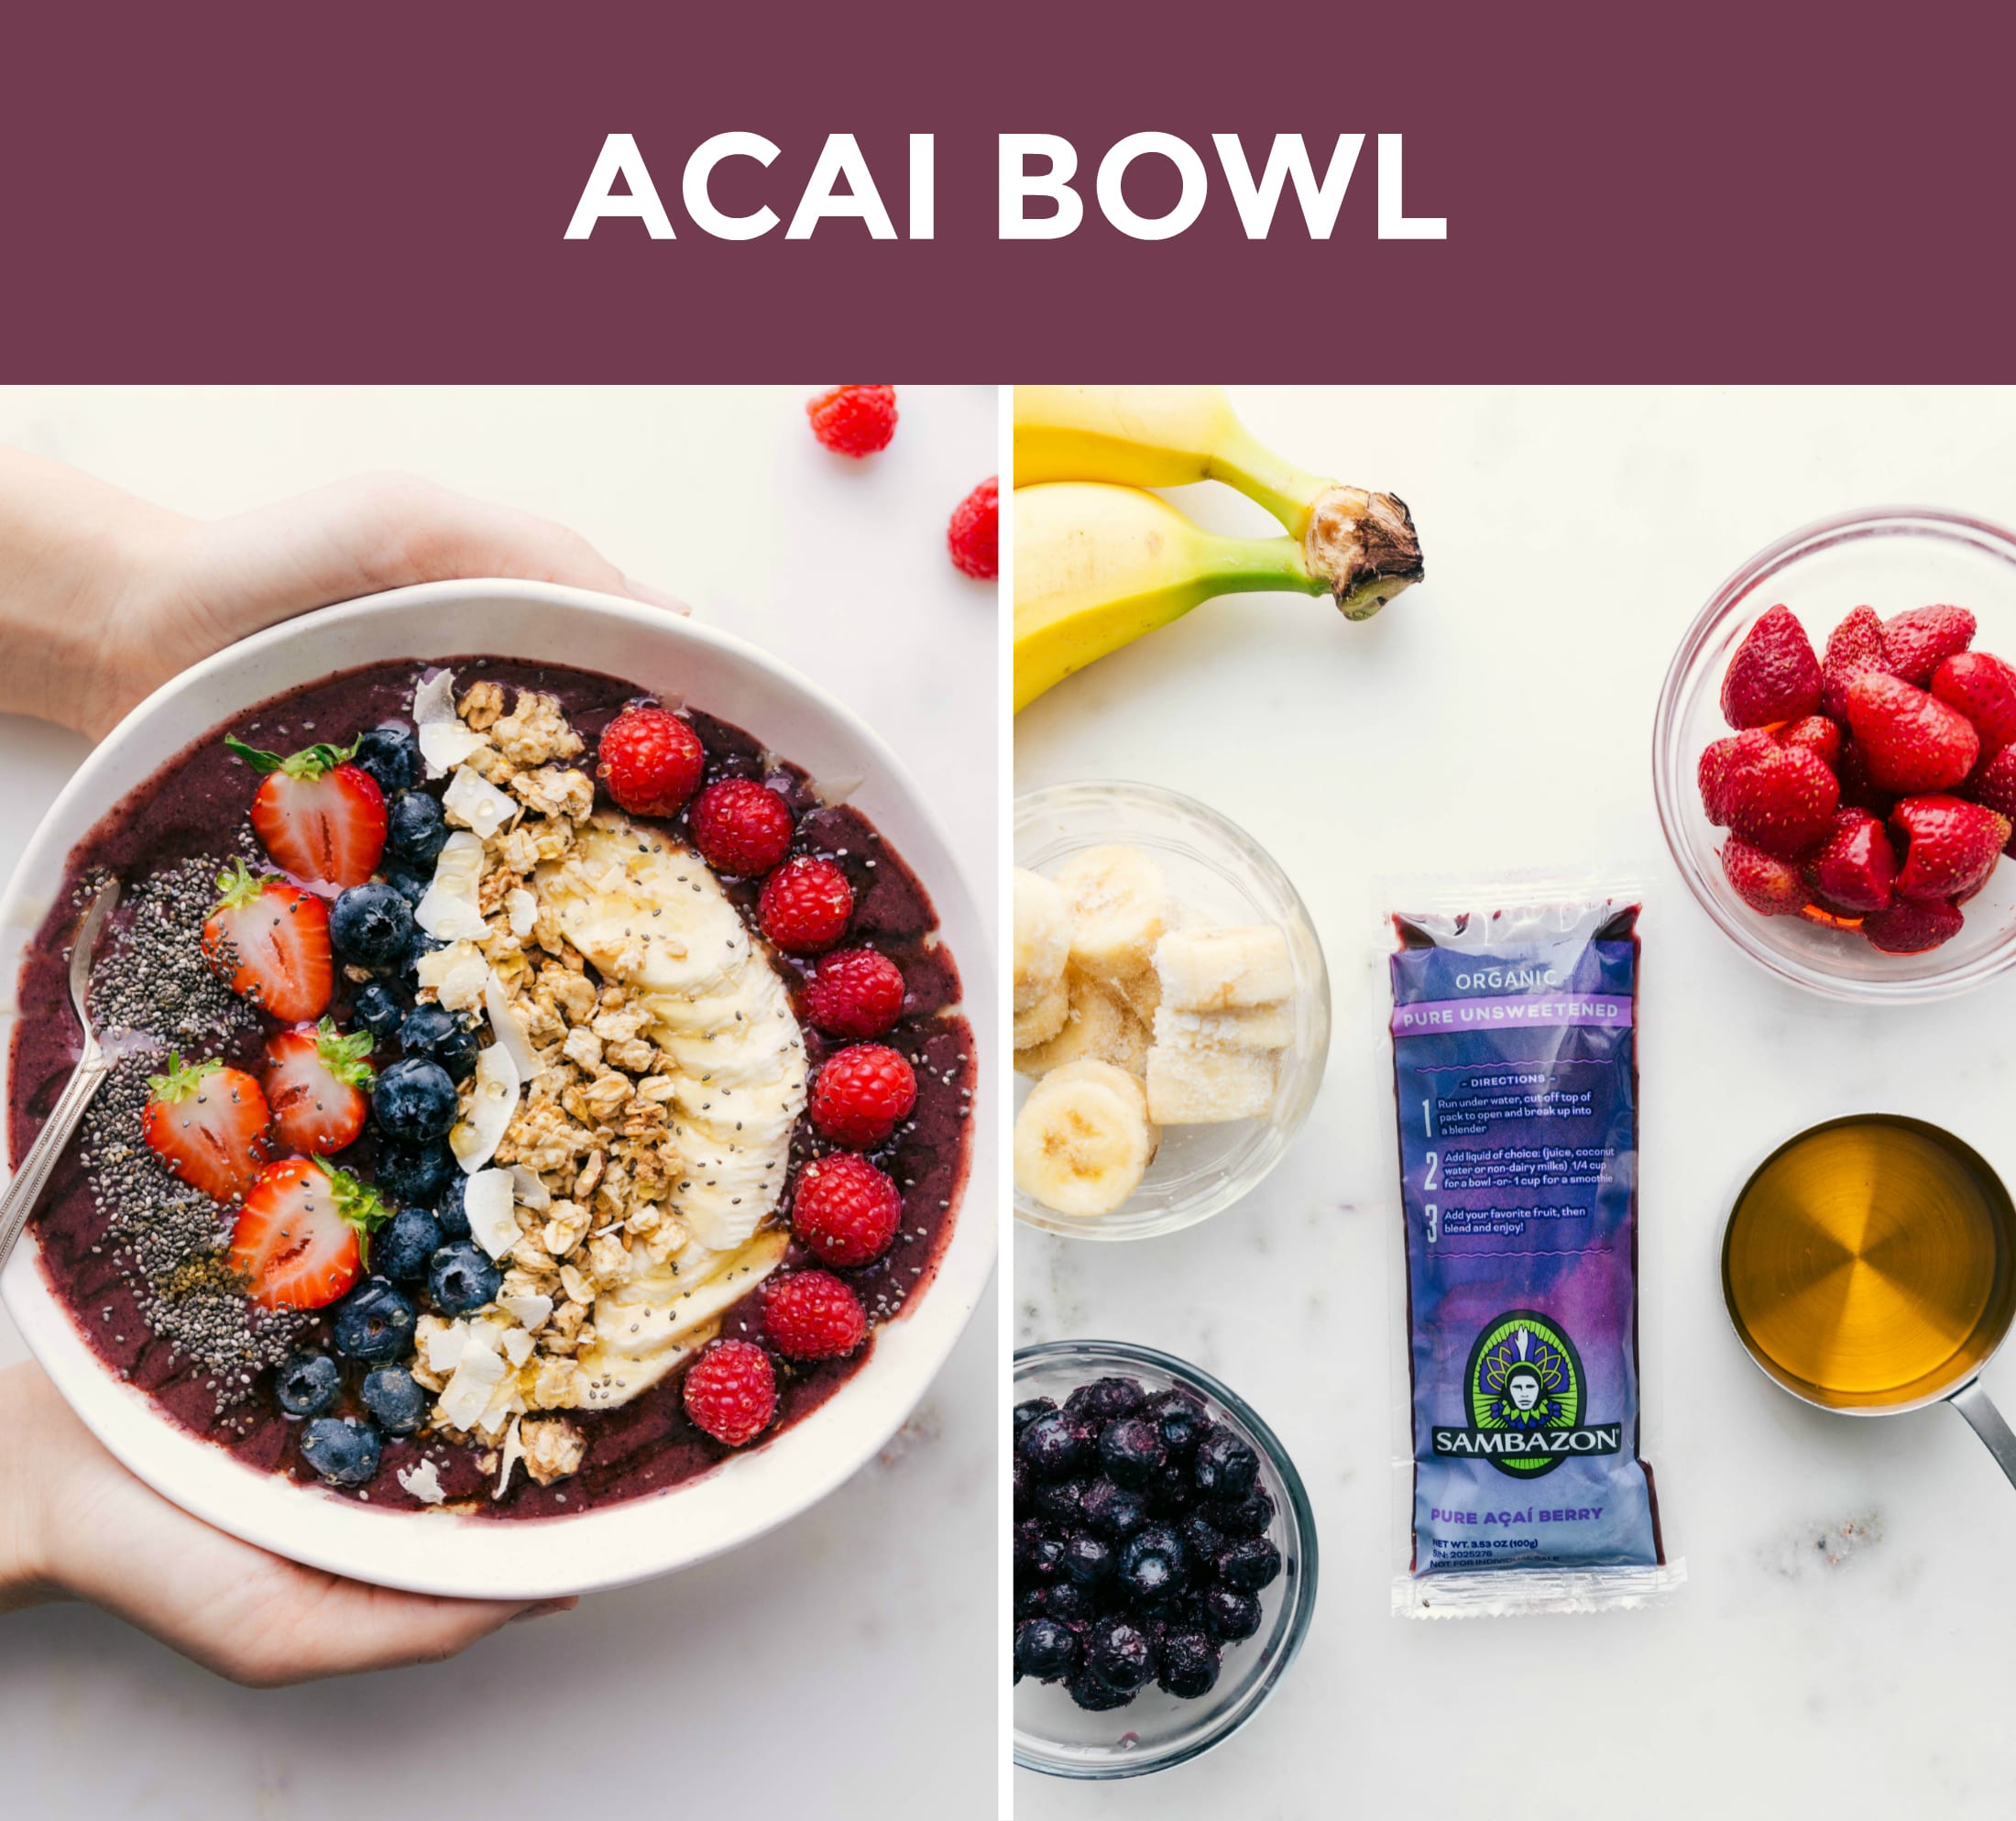 How to Make an Acai Bowl